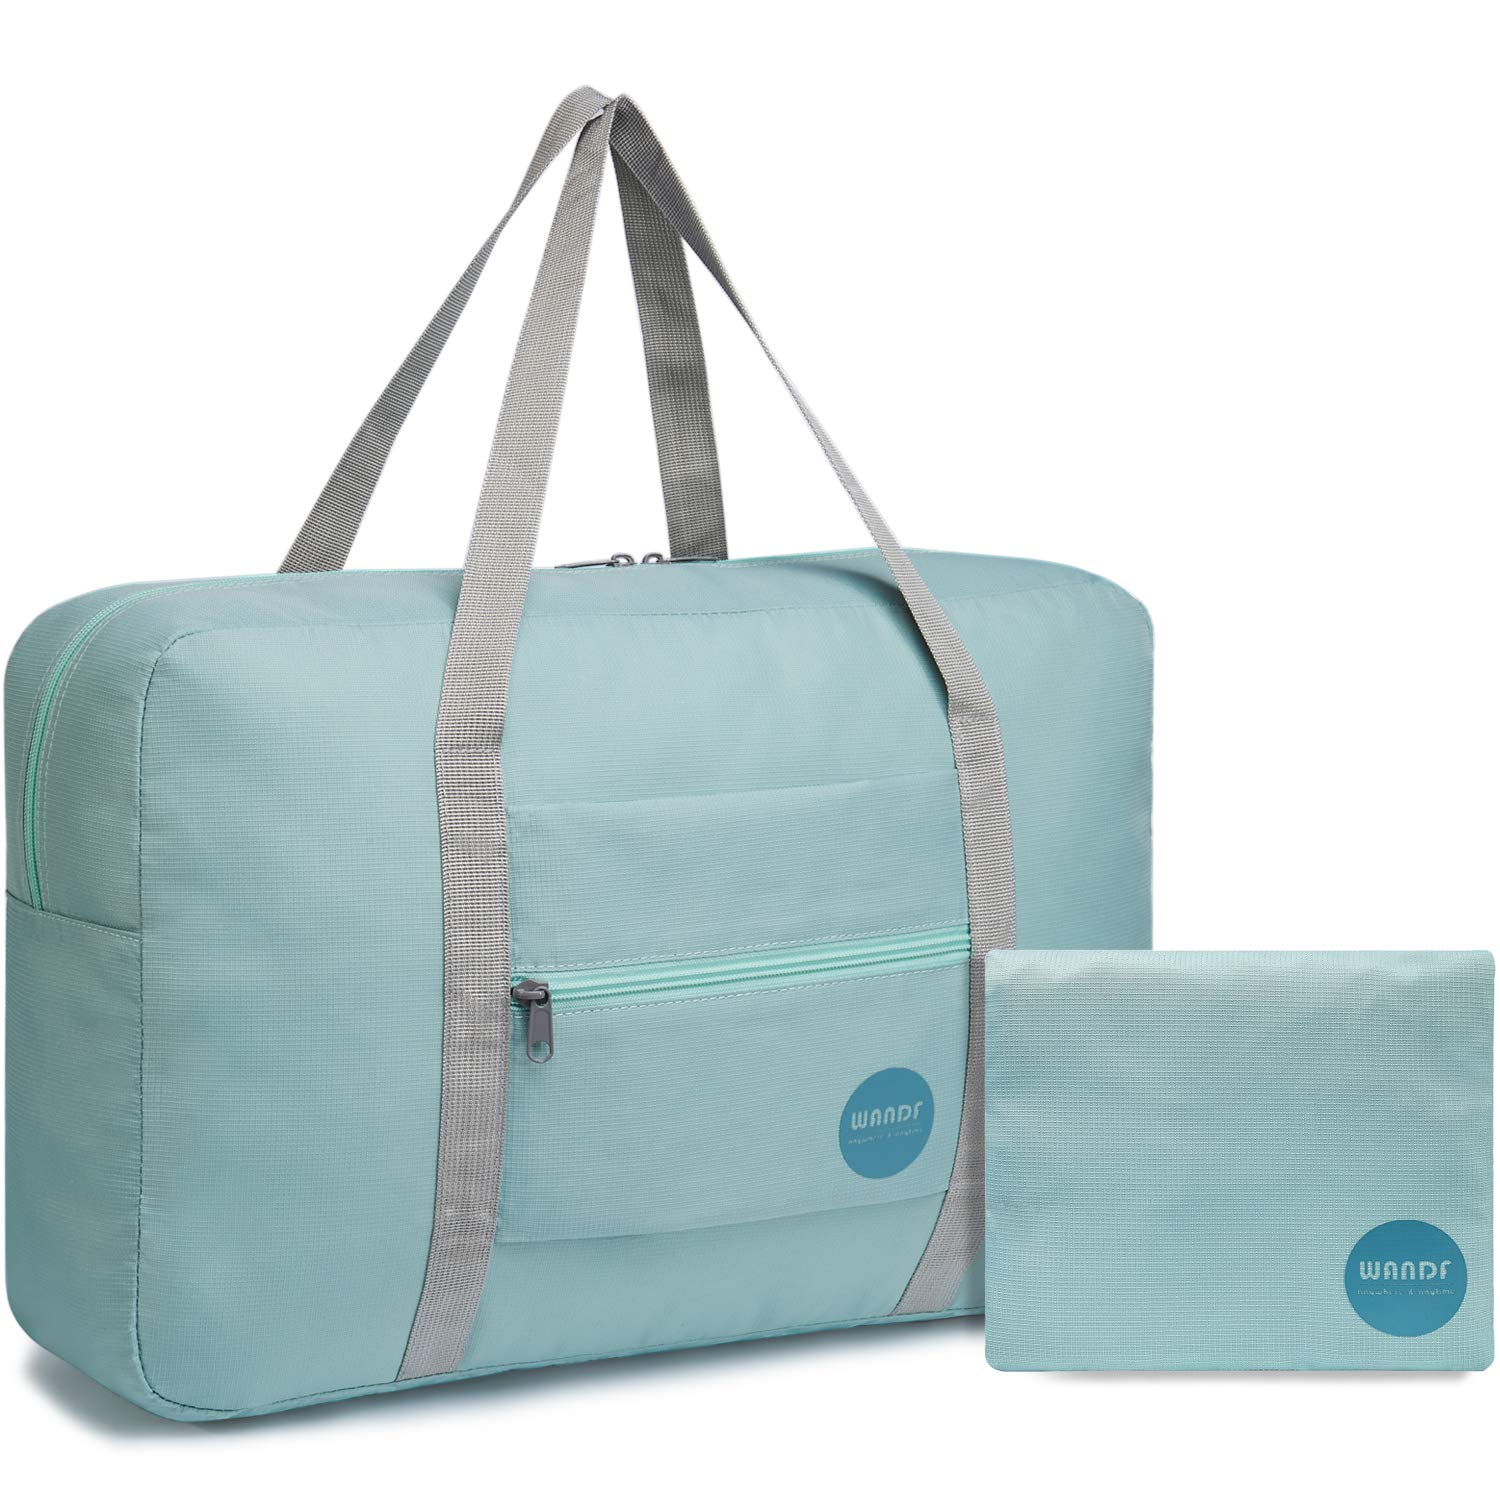 Travel Luggage Duffle Bag Lightweight Portable Handbag Red Hearts Large Capacity Waterproof Foldable Storage Tote 